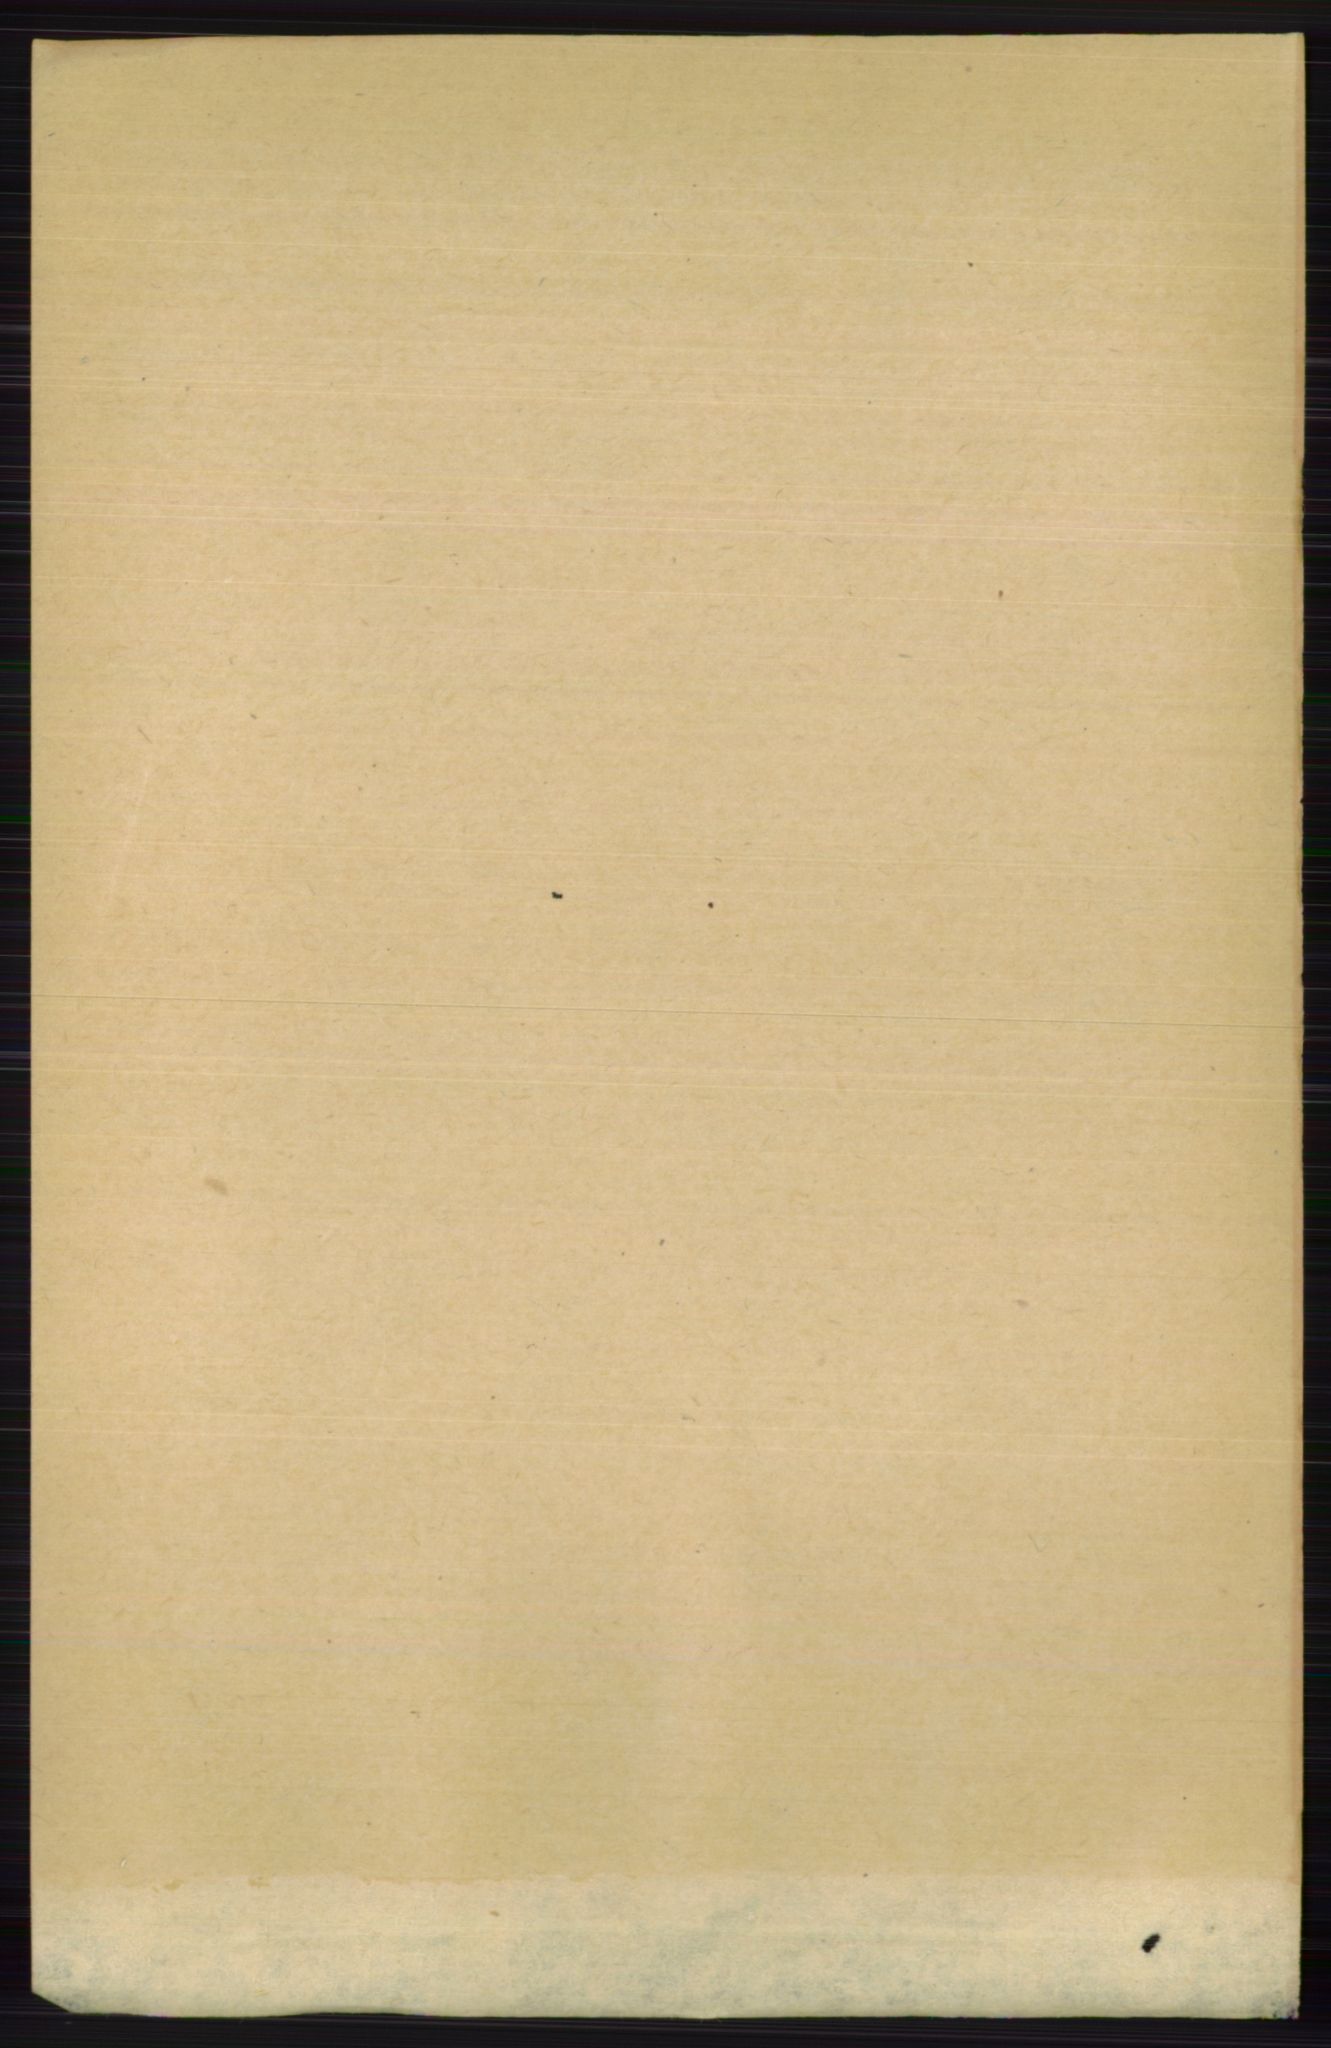 RA, Folketelling 1891 for 0719 Andebu herred, 1891, s. 137